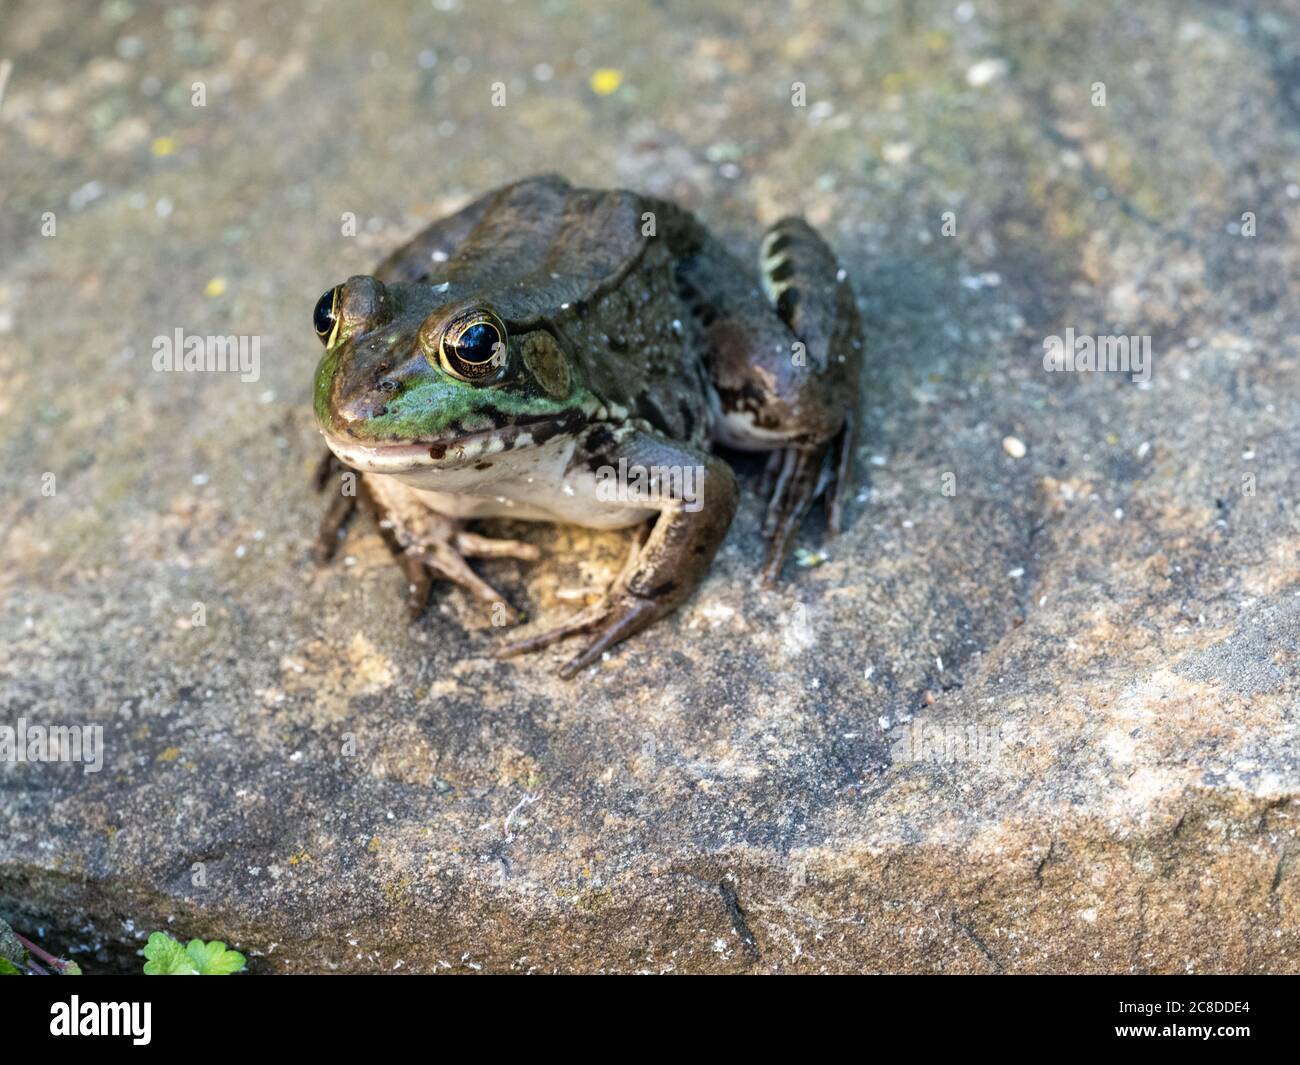 Green frog sitting on stone Stock Photo